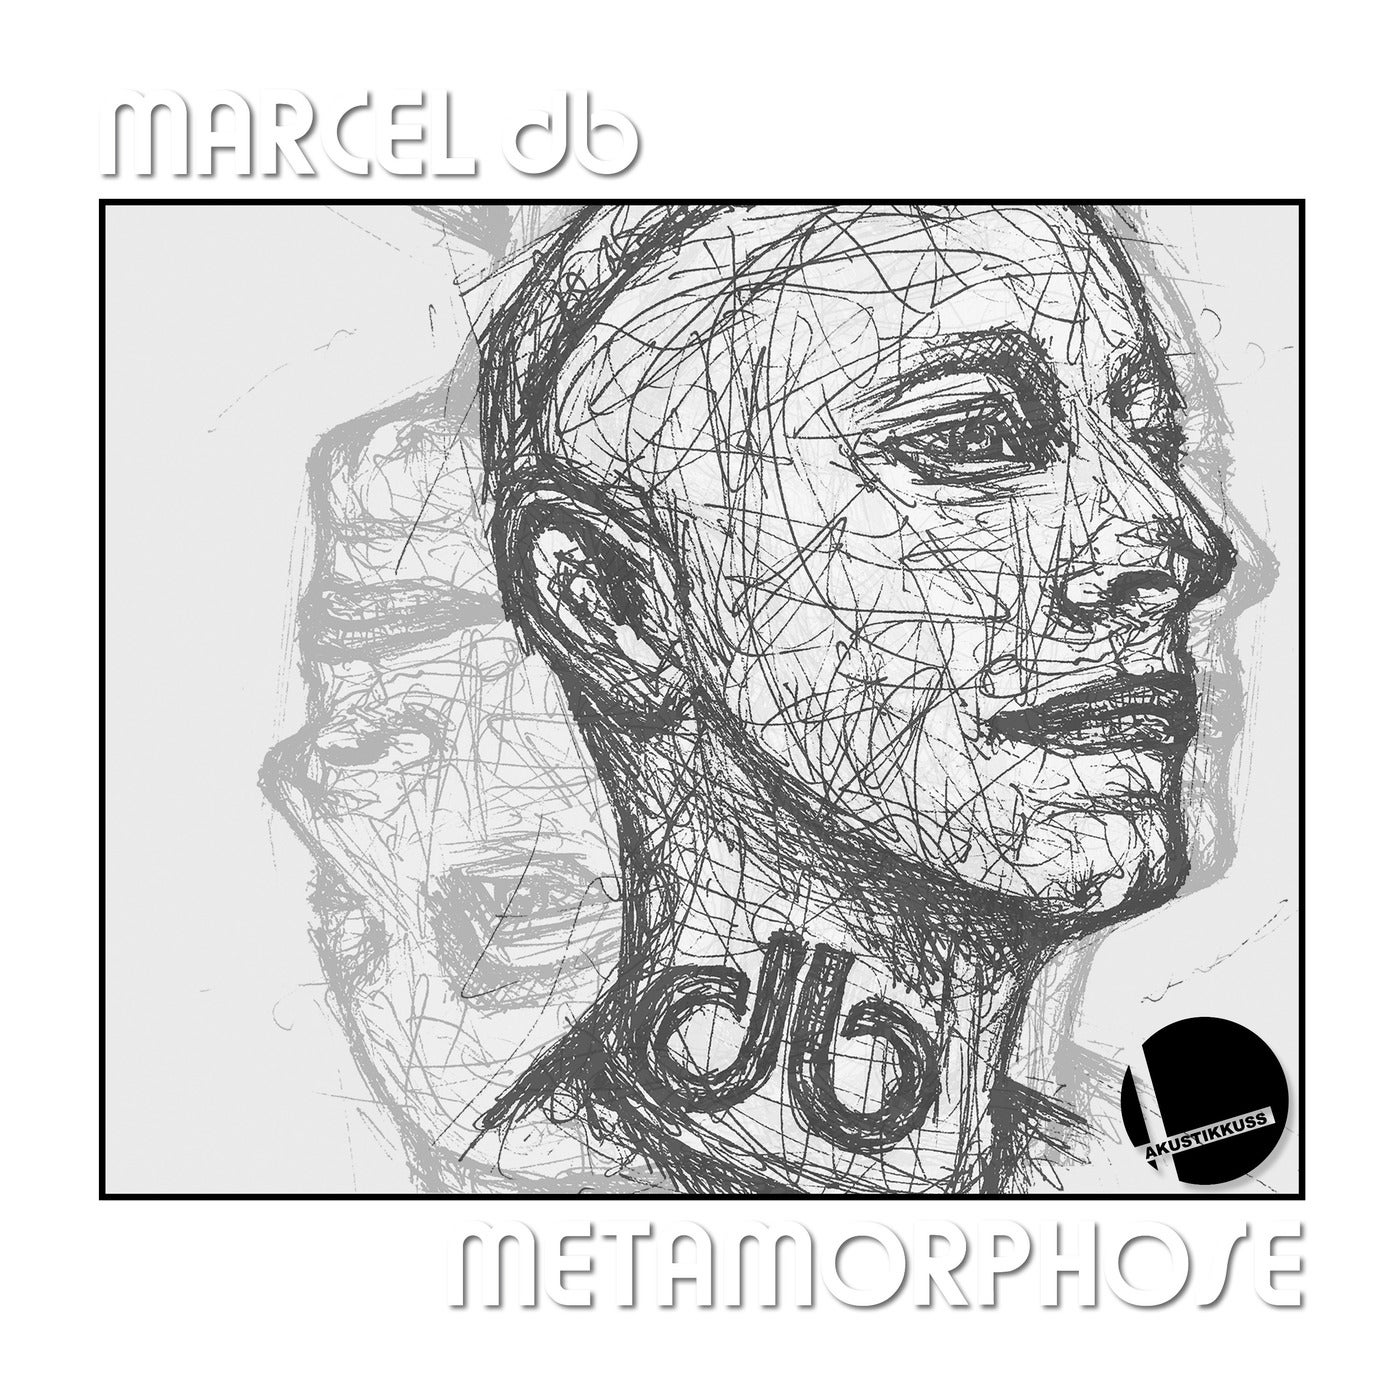 Marcel db – Metamorphose [10192301]